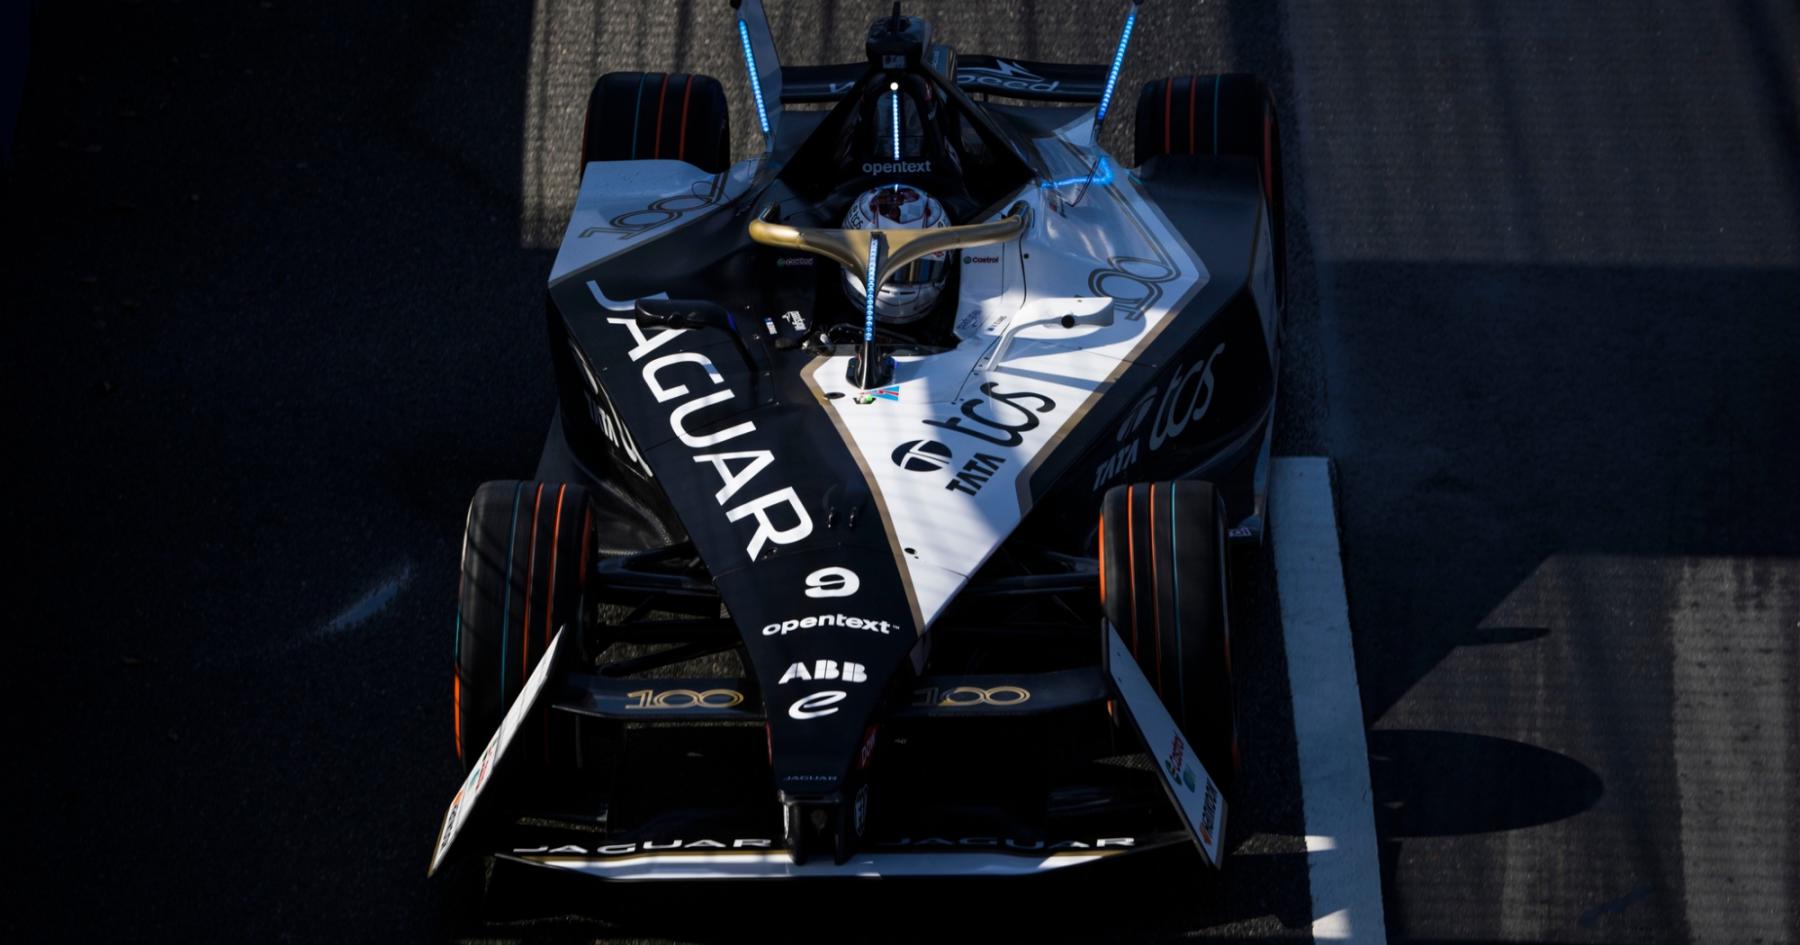 Evans Dominates Monaco Grand Prix with Jaguar 1-2 Victory